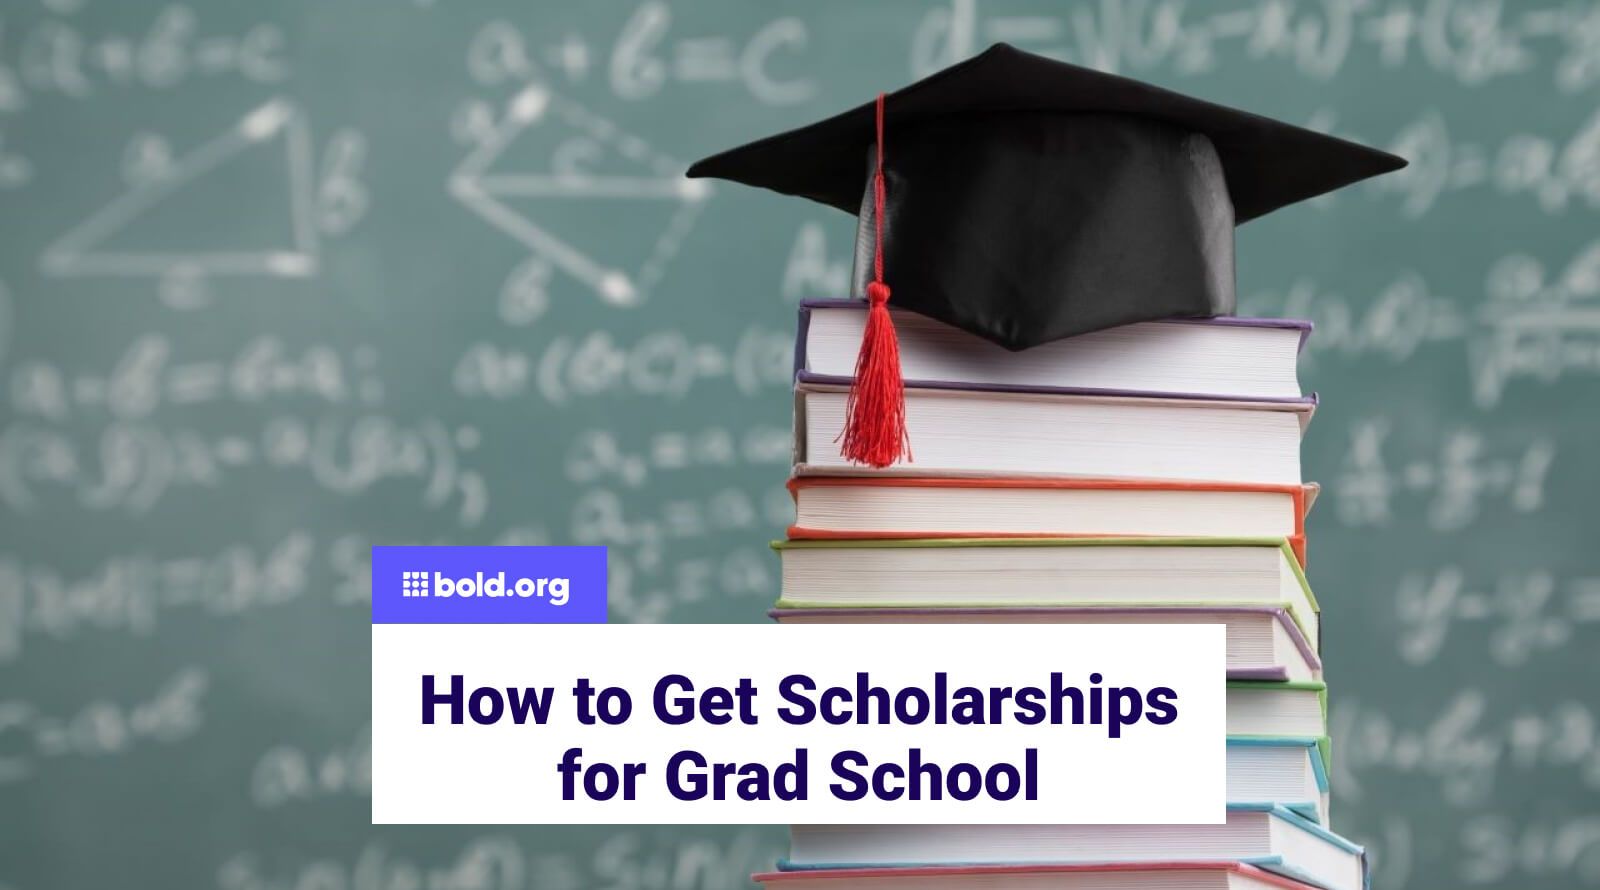 How to Get Scholarships for Grad School